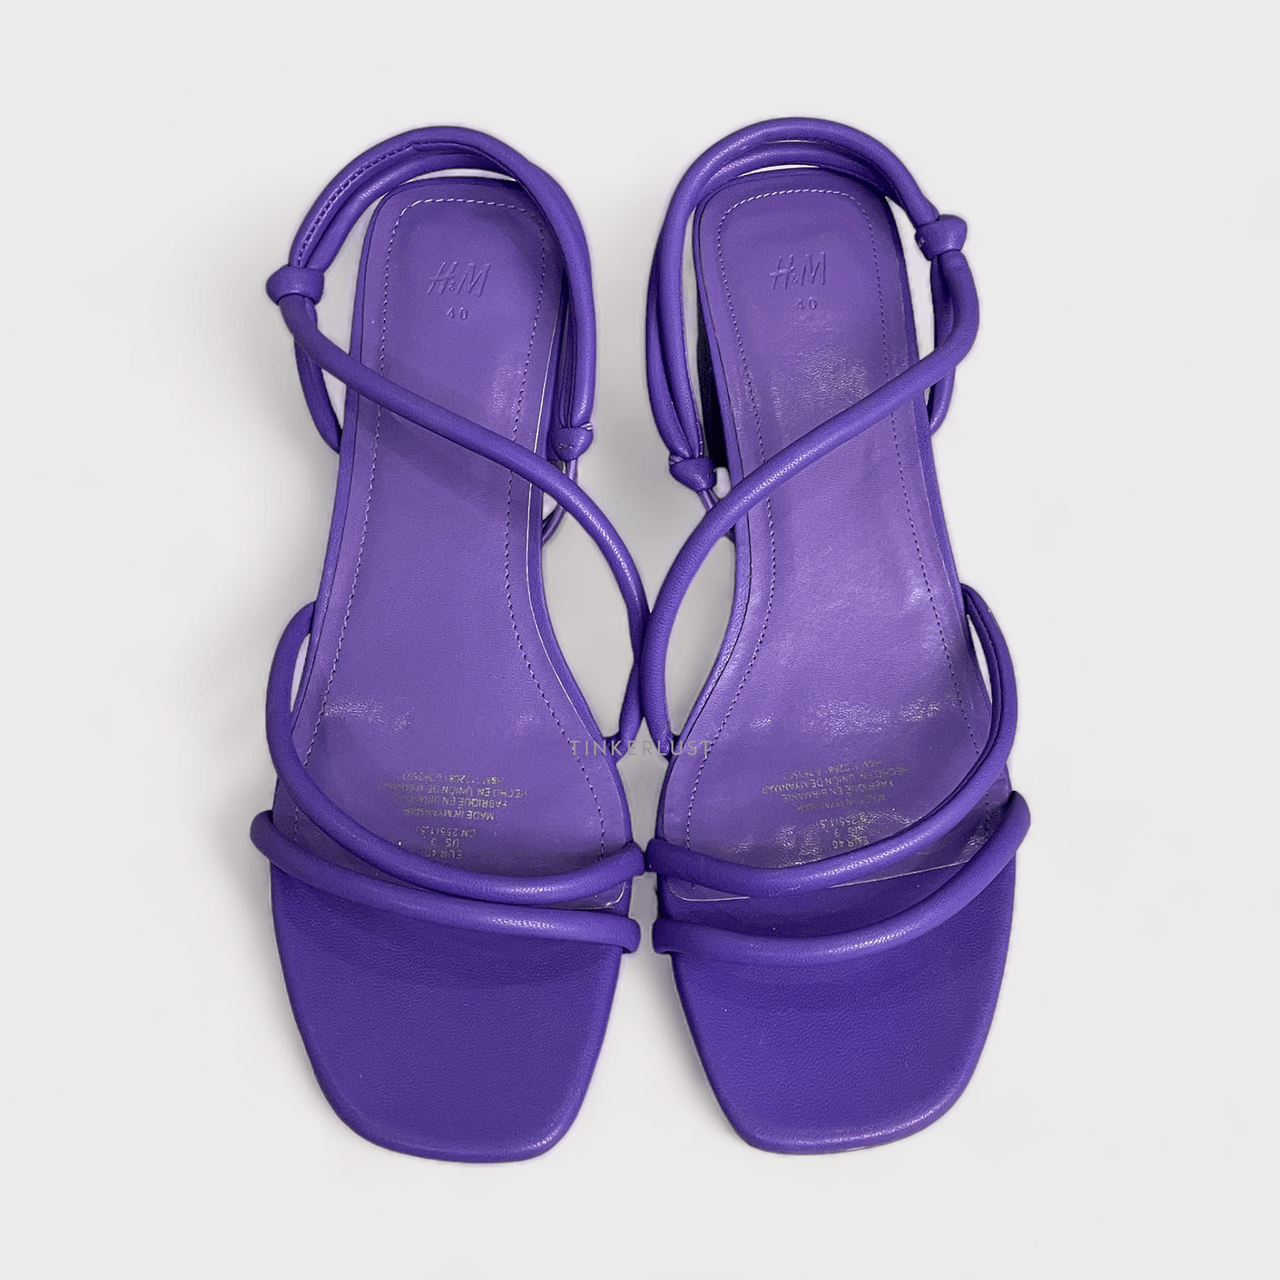 H&M Purple Heels